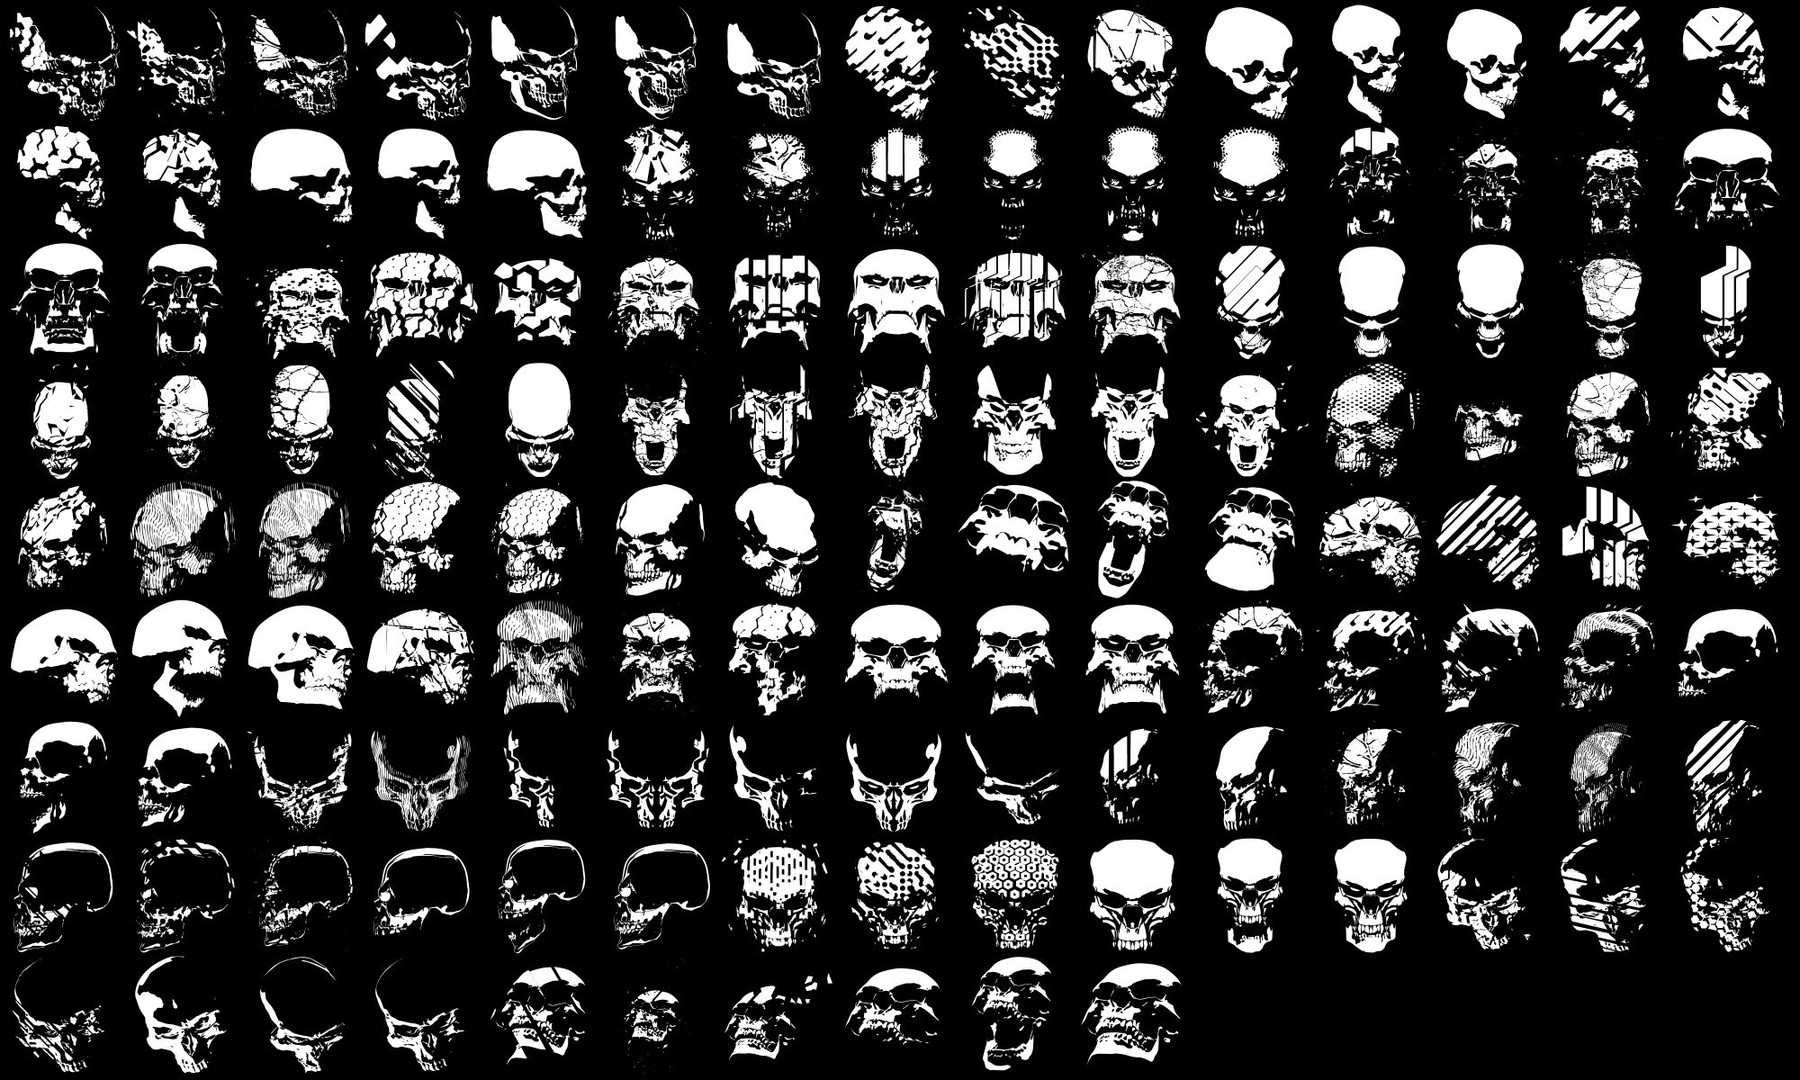 ArtStation - Skull Decal Pack - 100+ | Game Assets